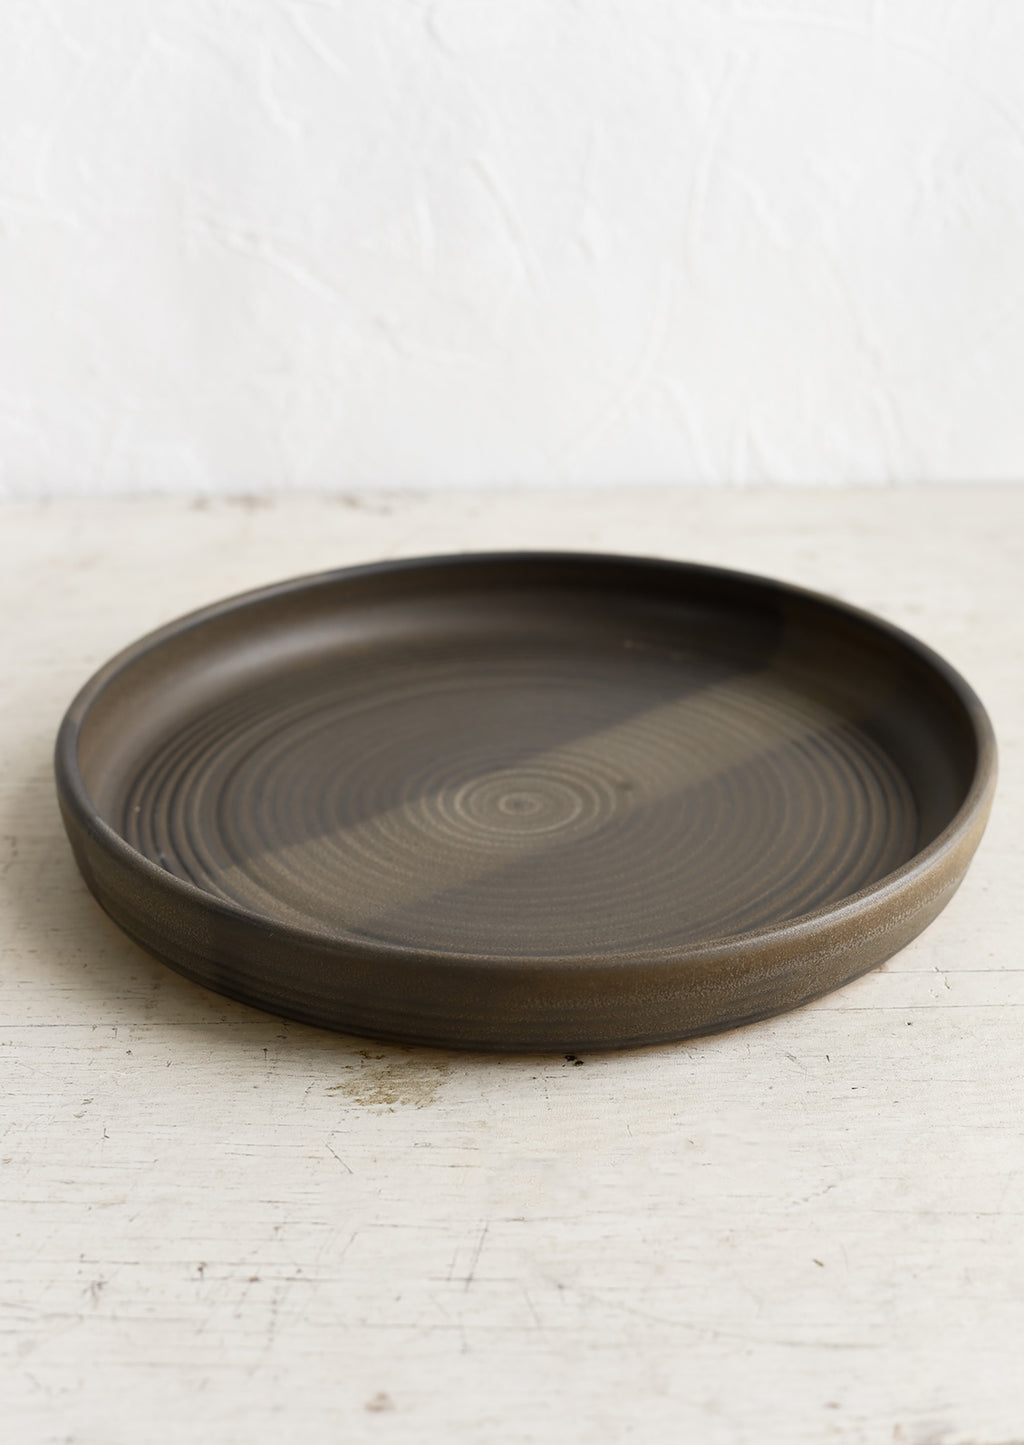 Matte Earth: A shallow serving plate in matte dark brown.